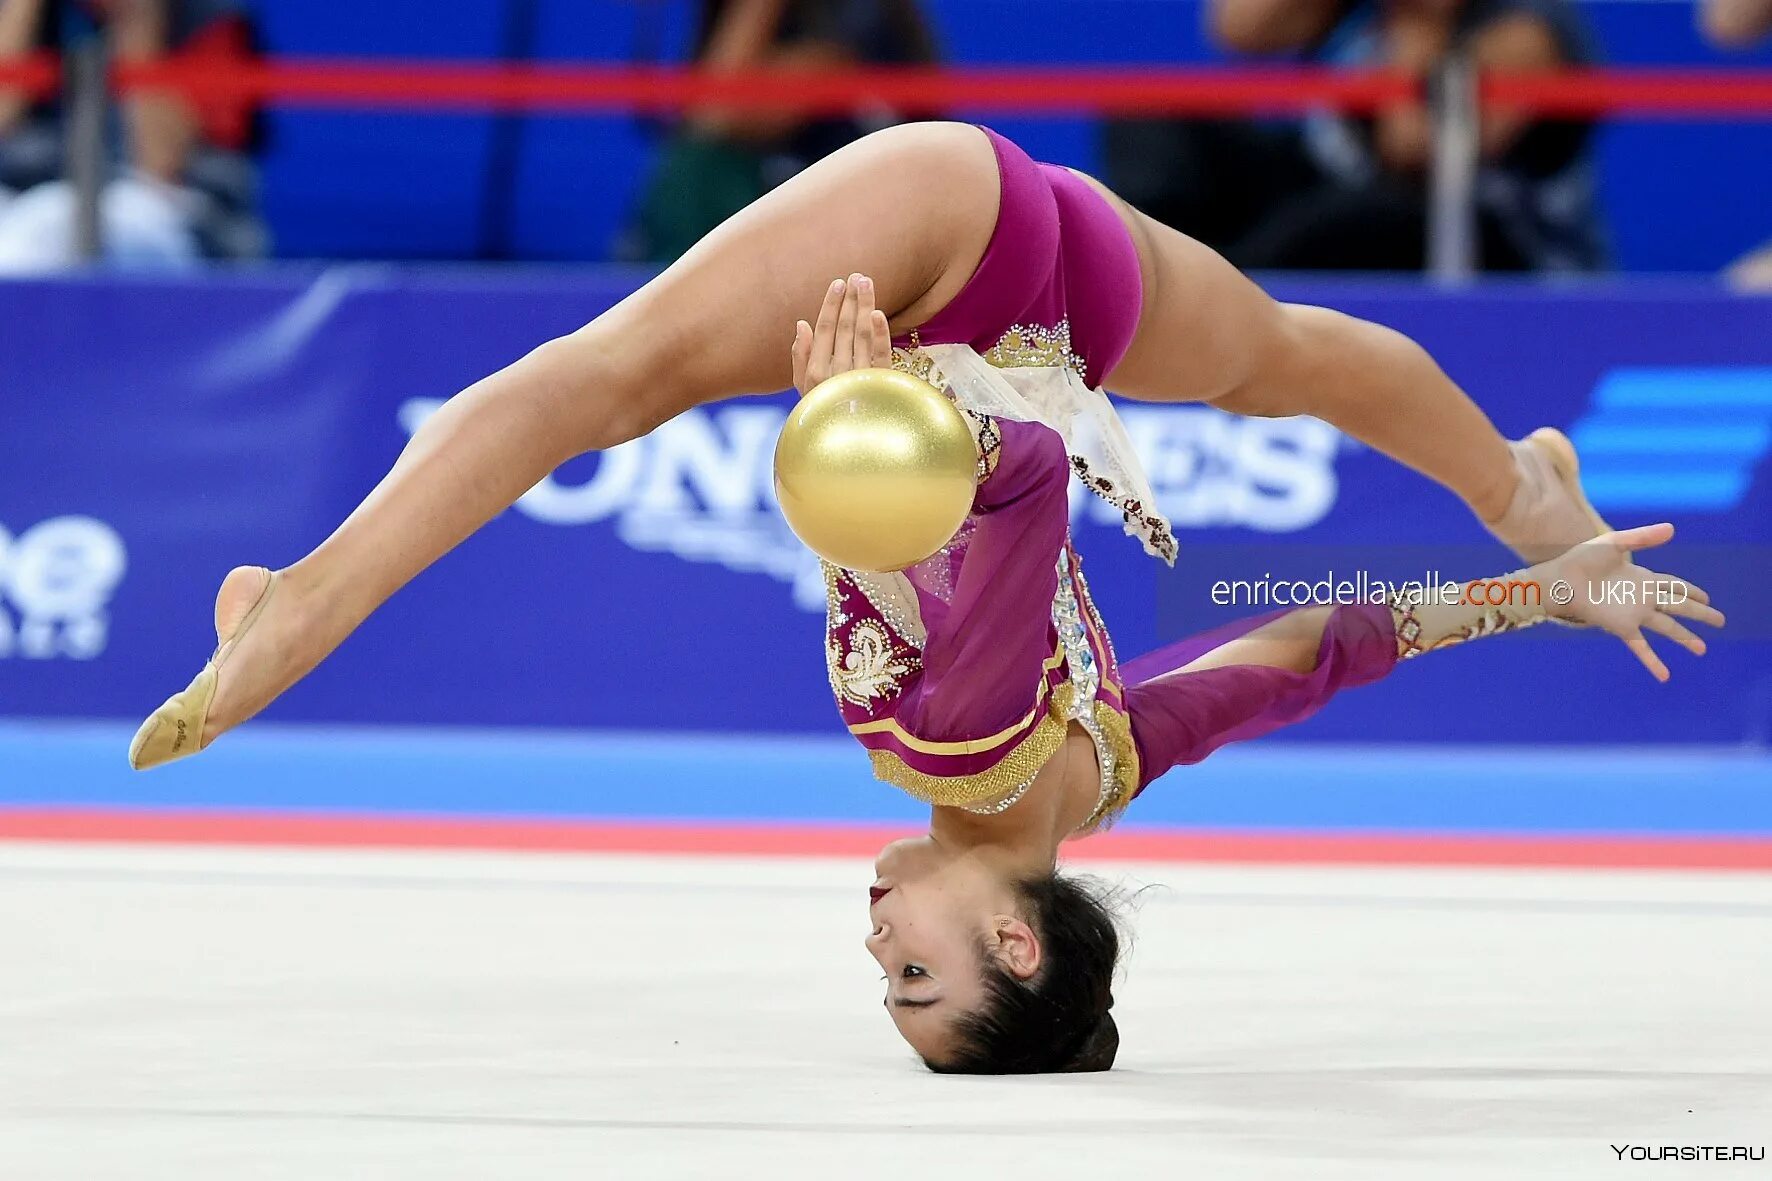 Alexandra Agiurgiuculese художественная гимнастика. Кристофер Бенитес художественная гимнастика.